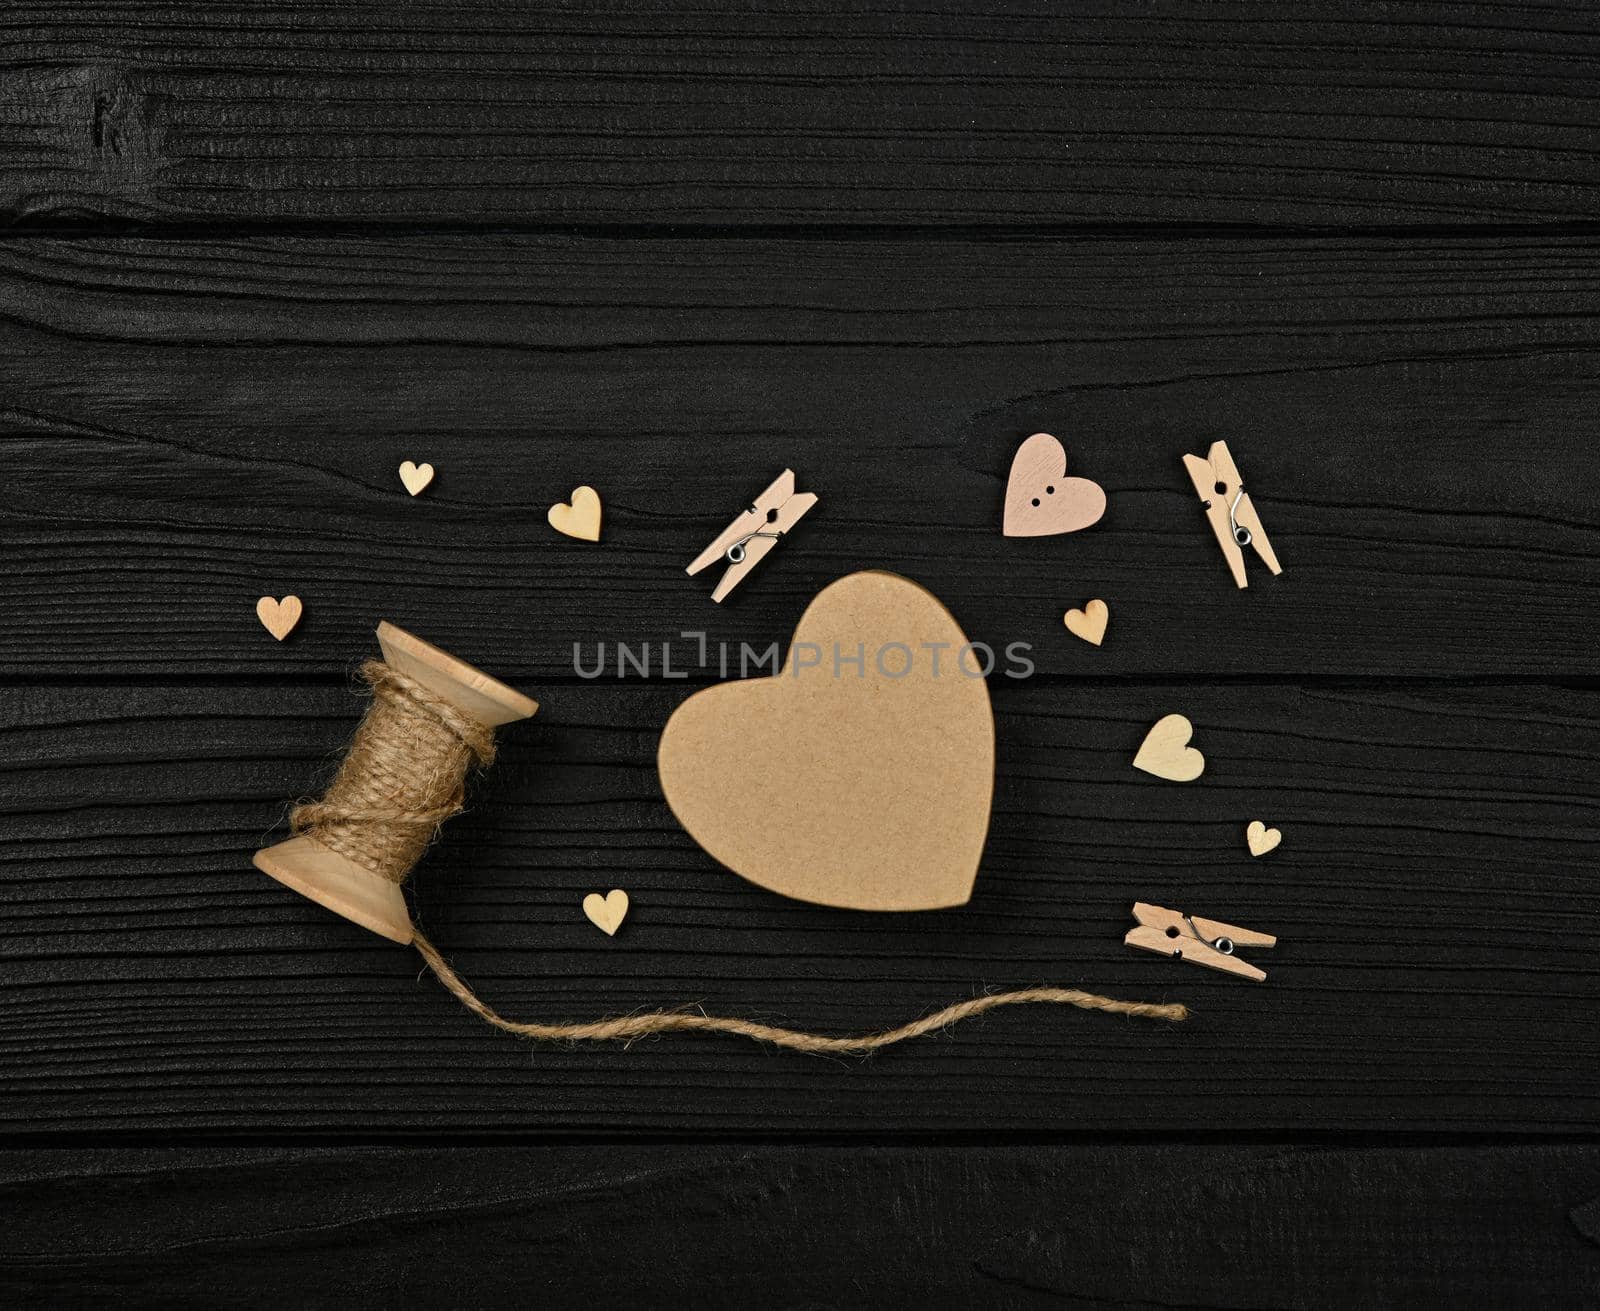 Preparing Valentine gifts on black wooden table by BreakingTheWalls